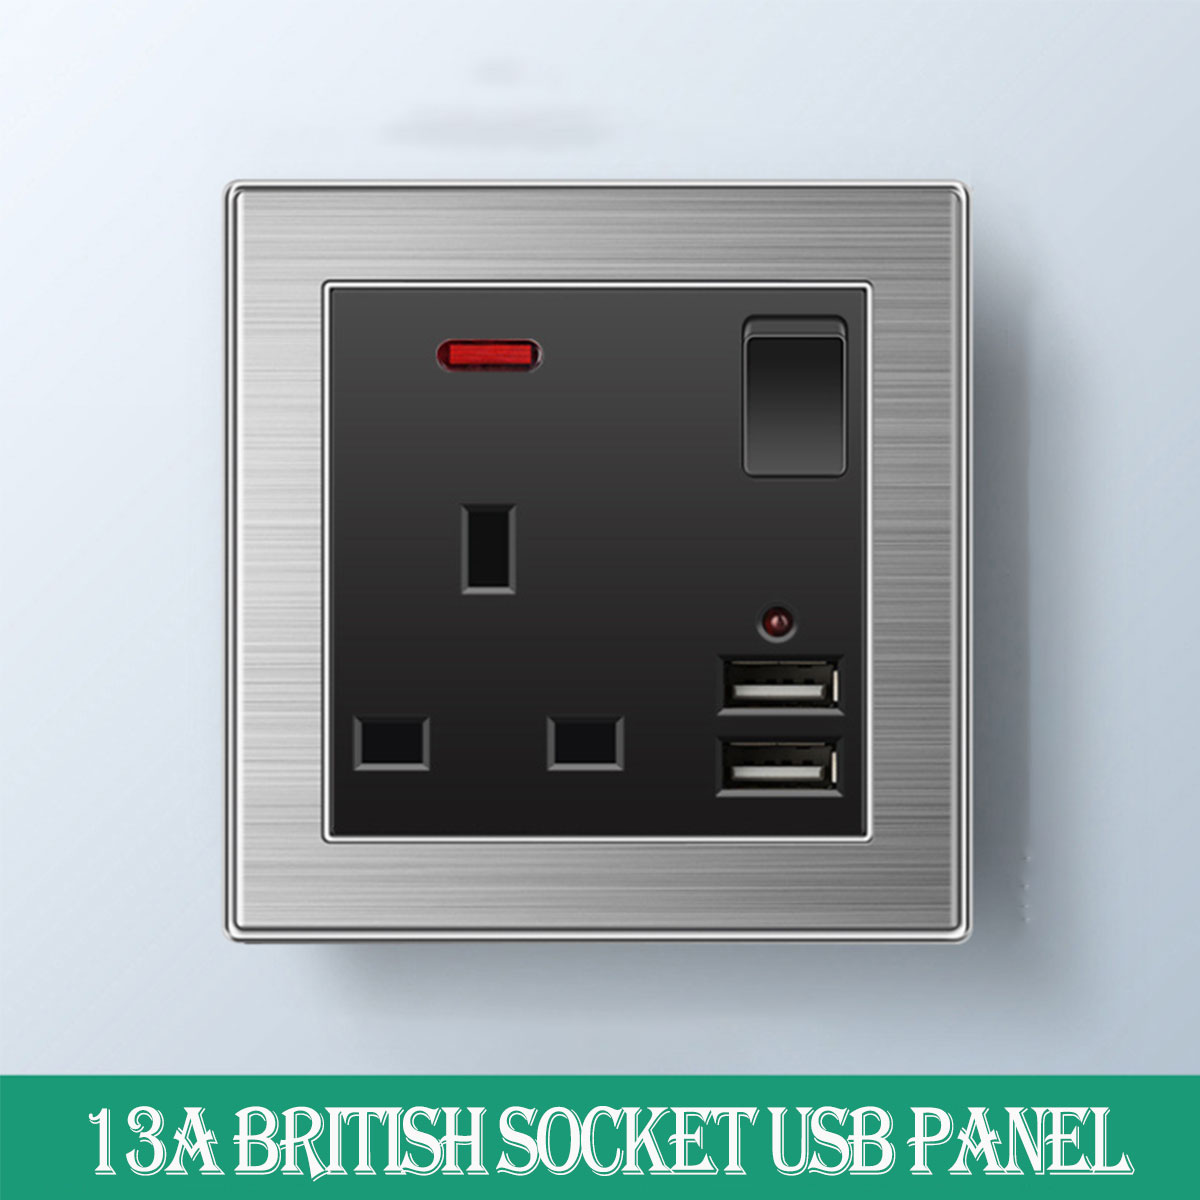 220V 13A Wall Power Plug Outlet USB 5V/2A Socket Panel Home Wall Socket British Standard